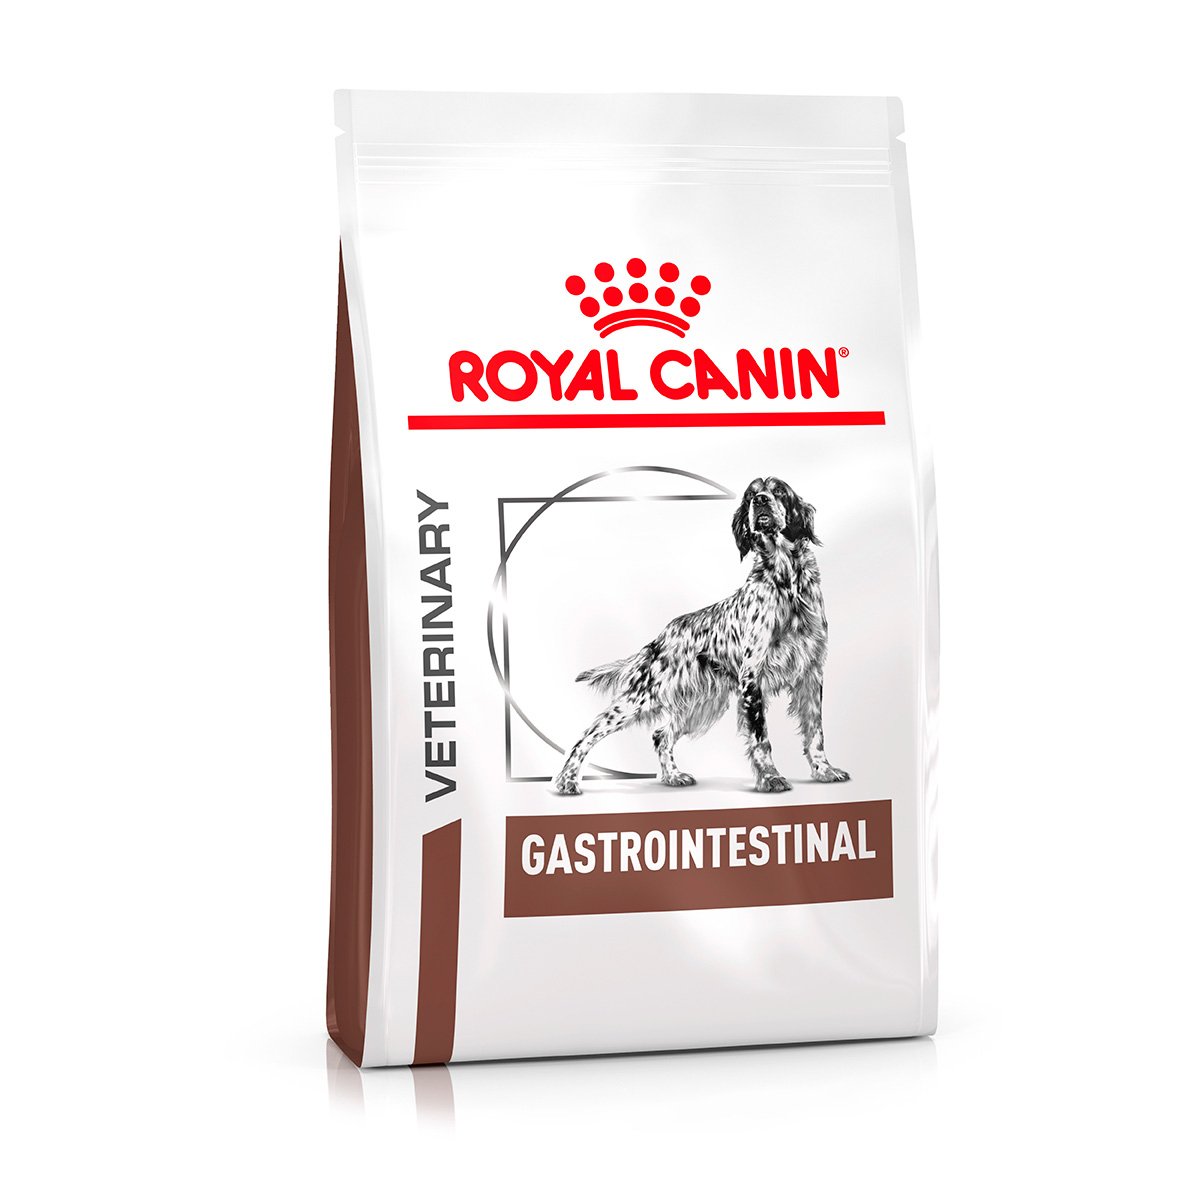 ROYAL CANIN® Veterinary GASTROINTESTINAL Trockenfutter für Hunde 7kg von Royal Canin